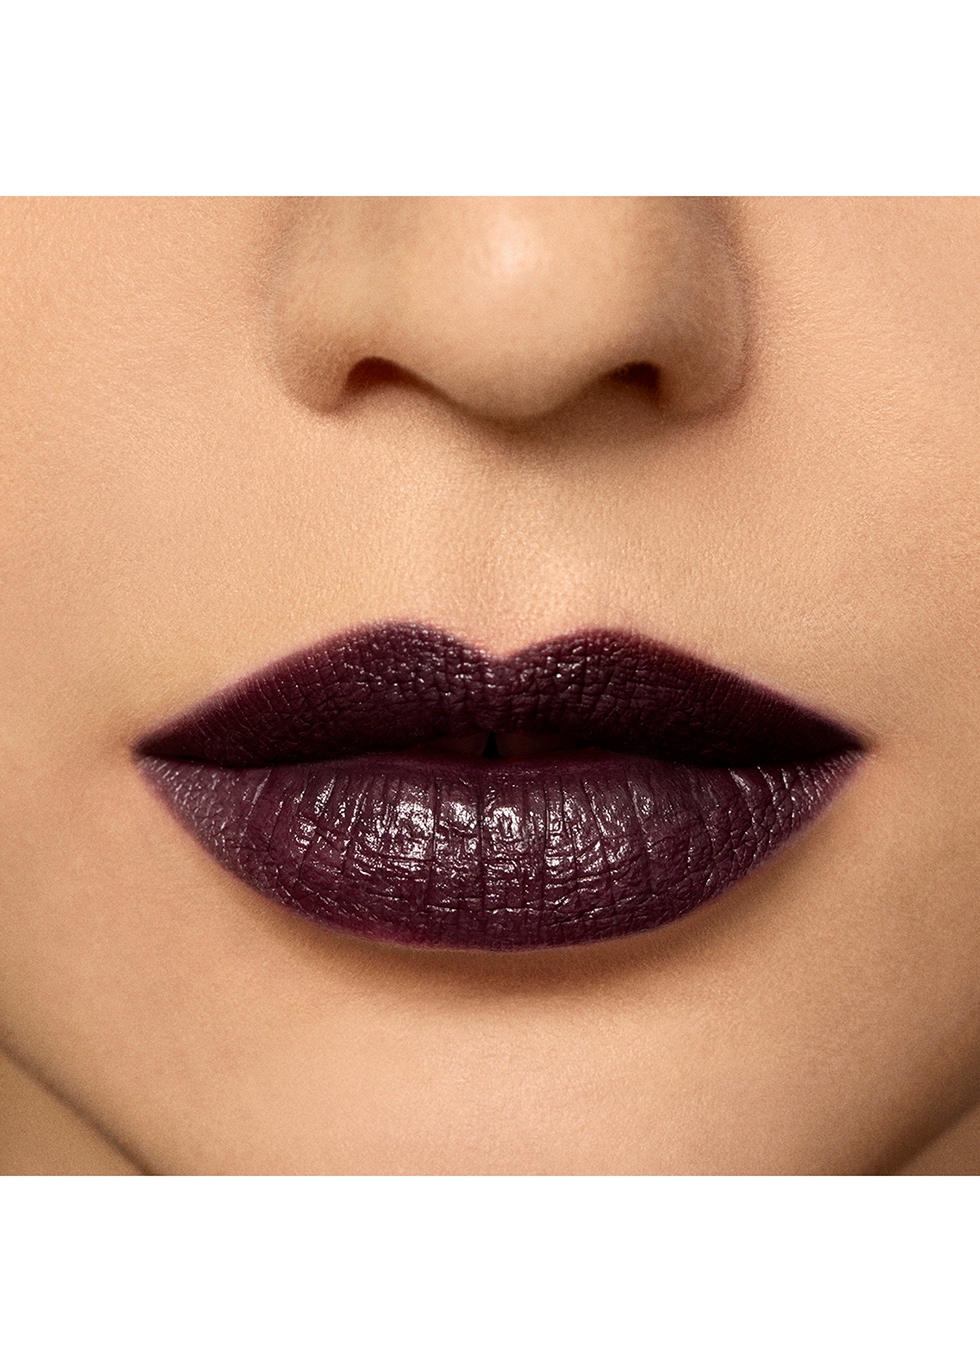 grey plum lipstick